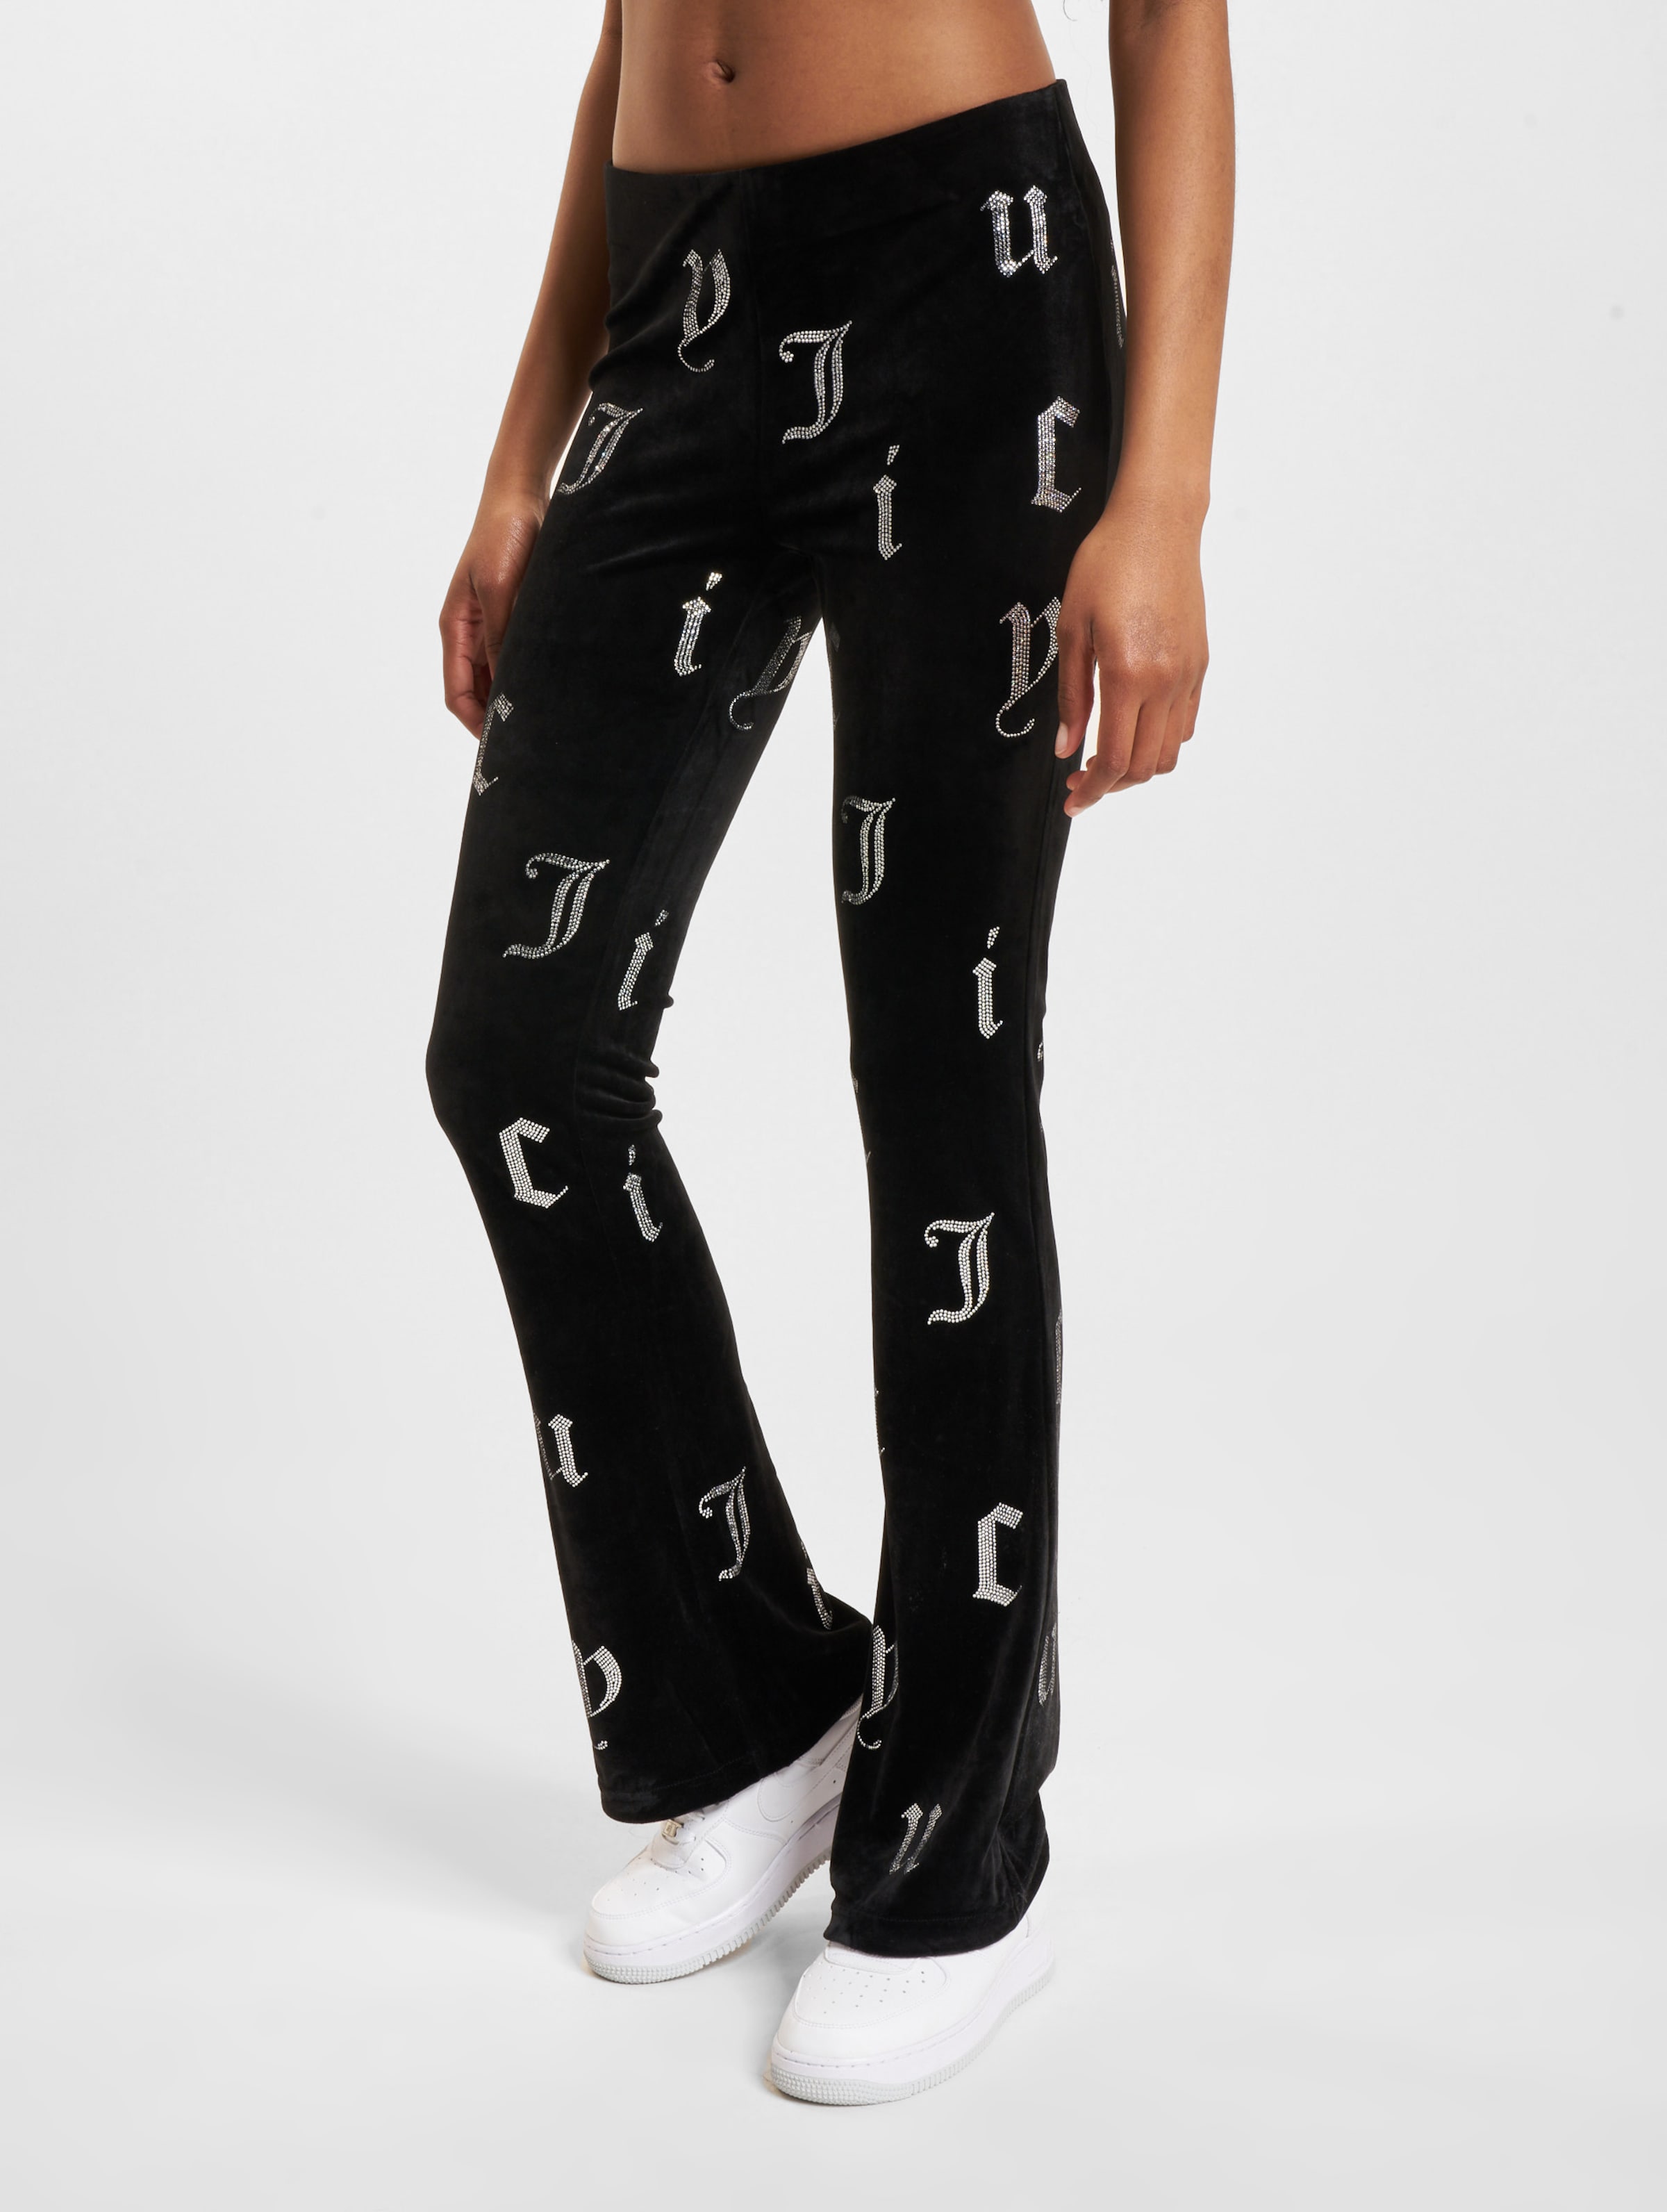 Juicy Couture Briah Low Rise Jogginghosen Frauen,Unisex op kleur zwart, Maat XL